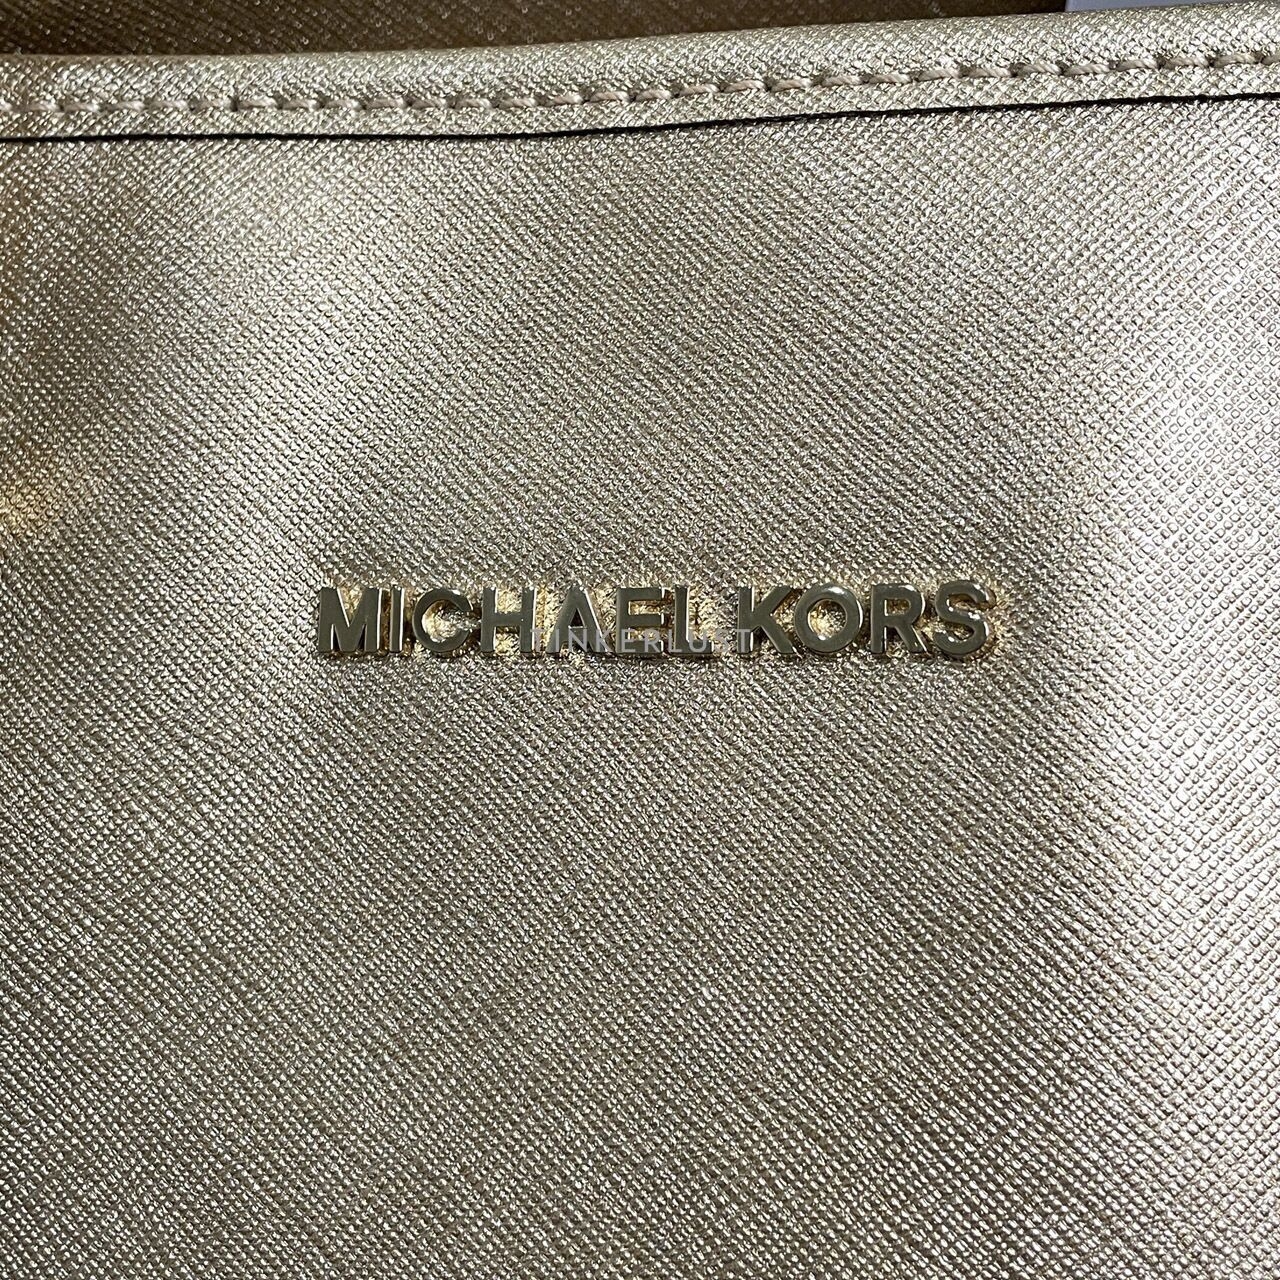 Michael Kors Jet Set Travel Gold GHW Tote Bag